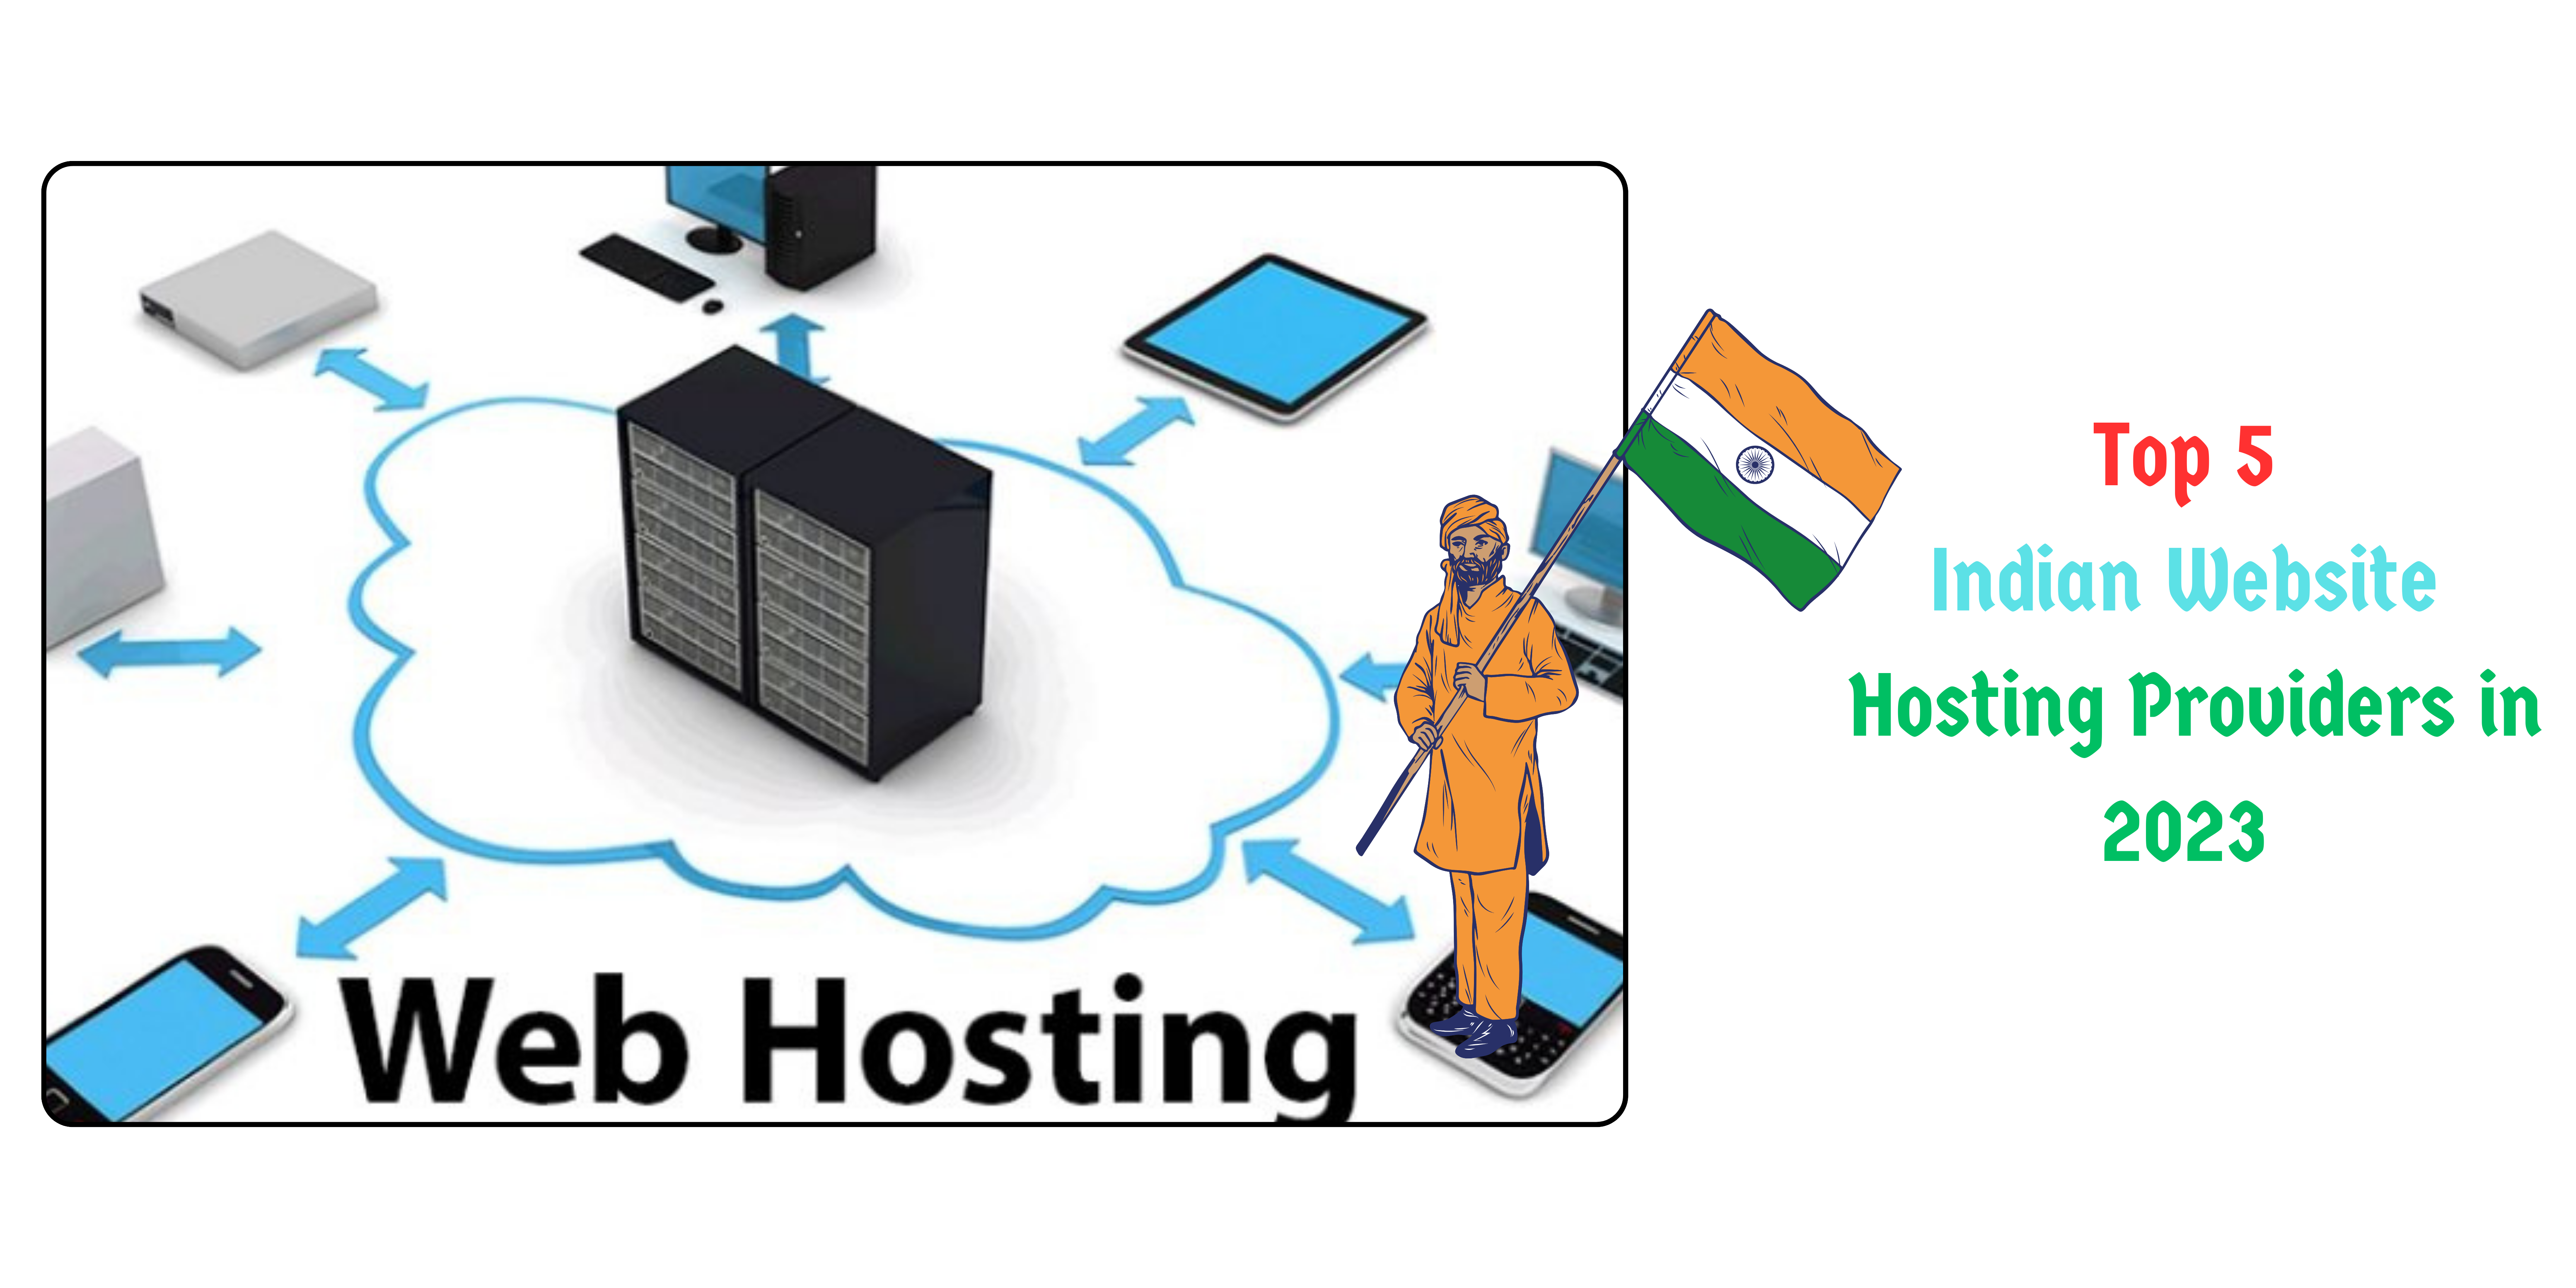 Top 5 Indian Website Hosting Providers